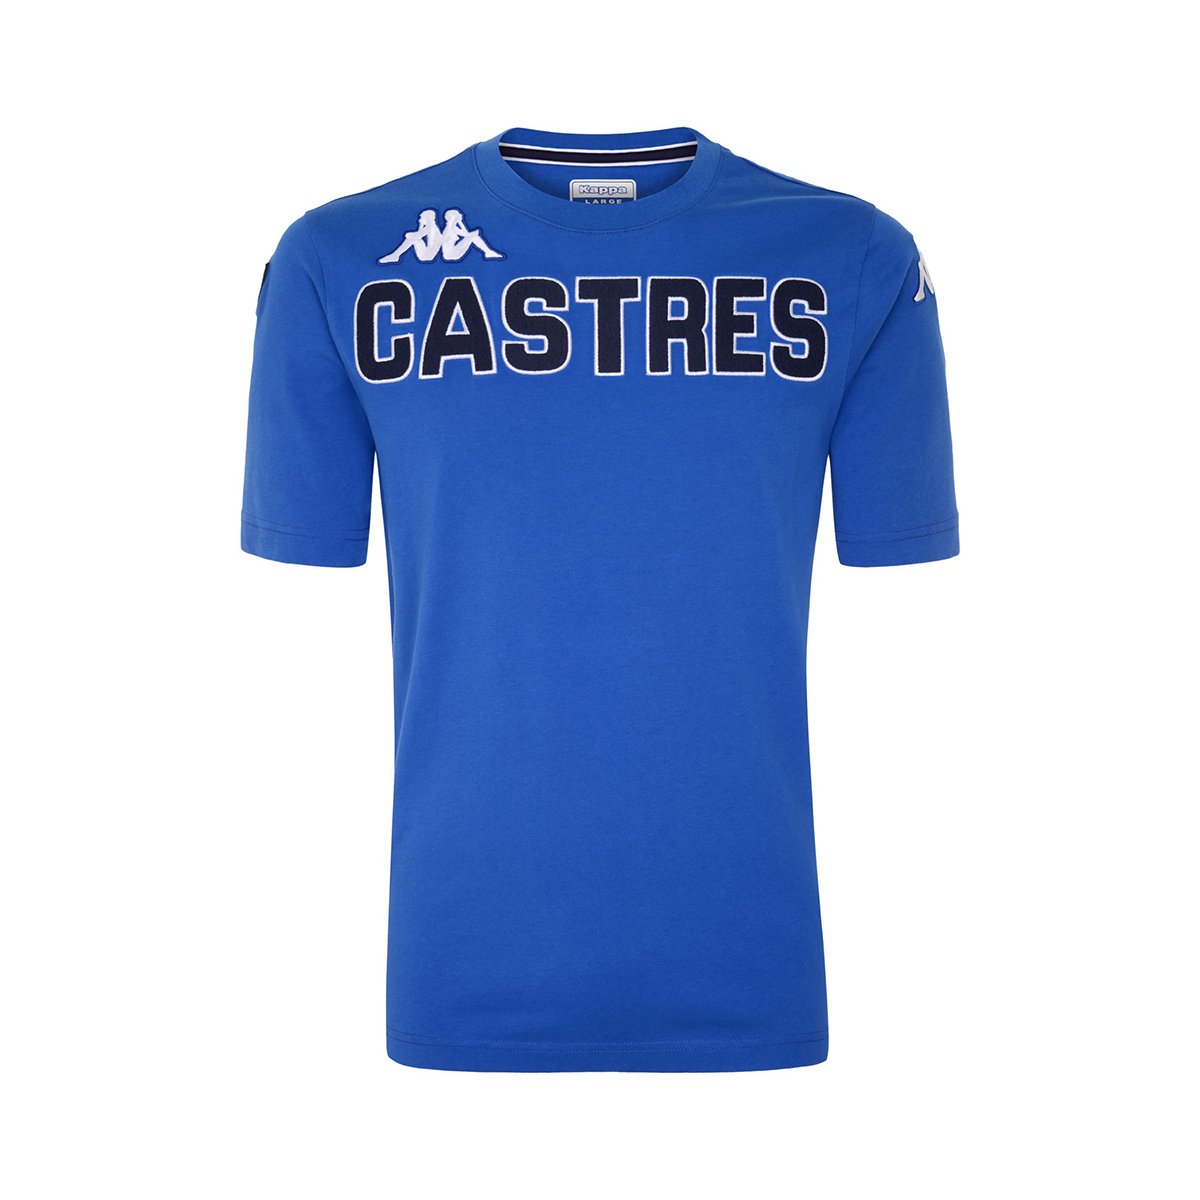 Camiseta  Eroi Tee Castres Olympique niño Azul - Imagen 1